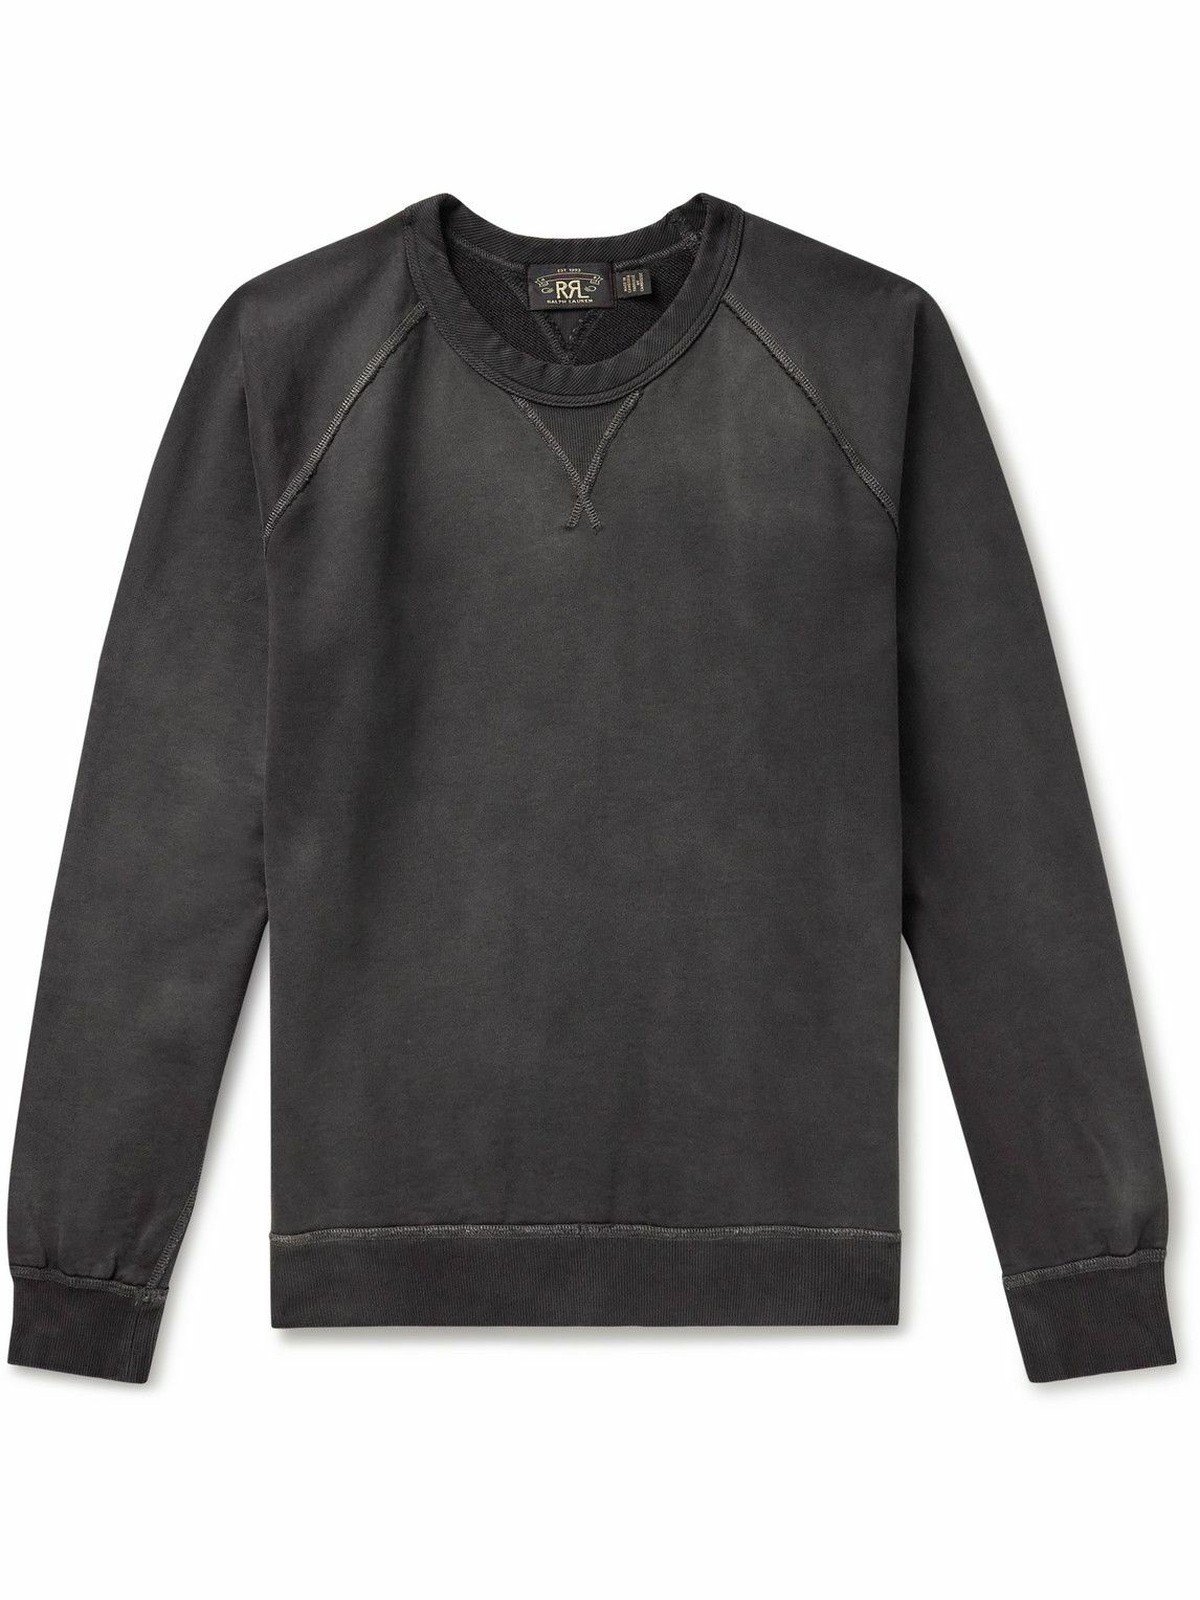 RRL - Cotton-Jersey Sweatshirt - Black RRL